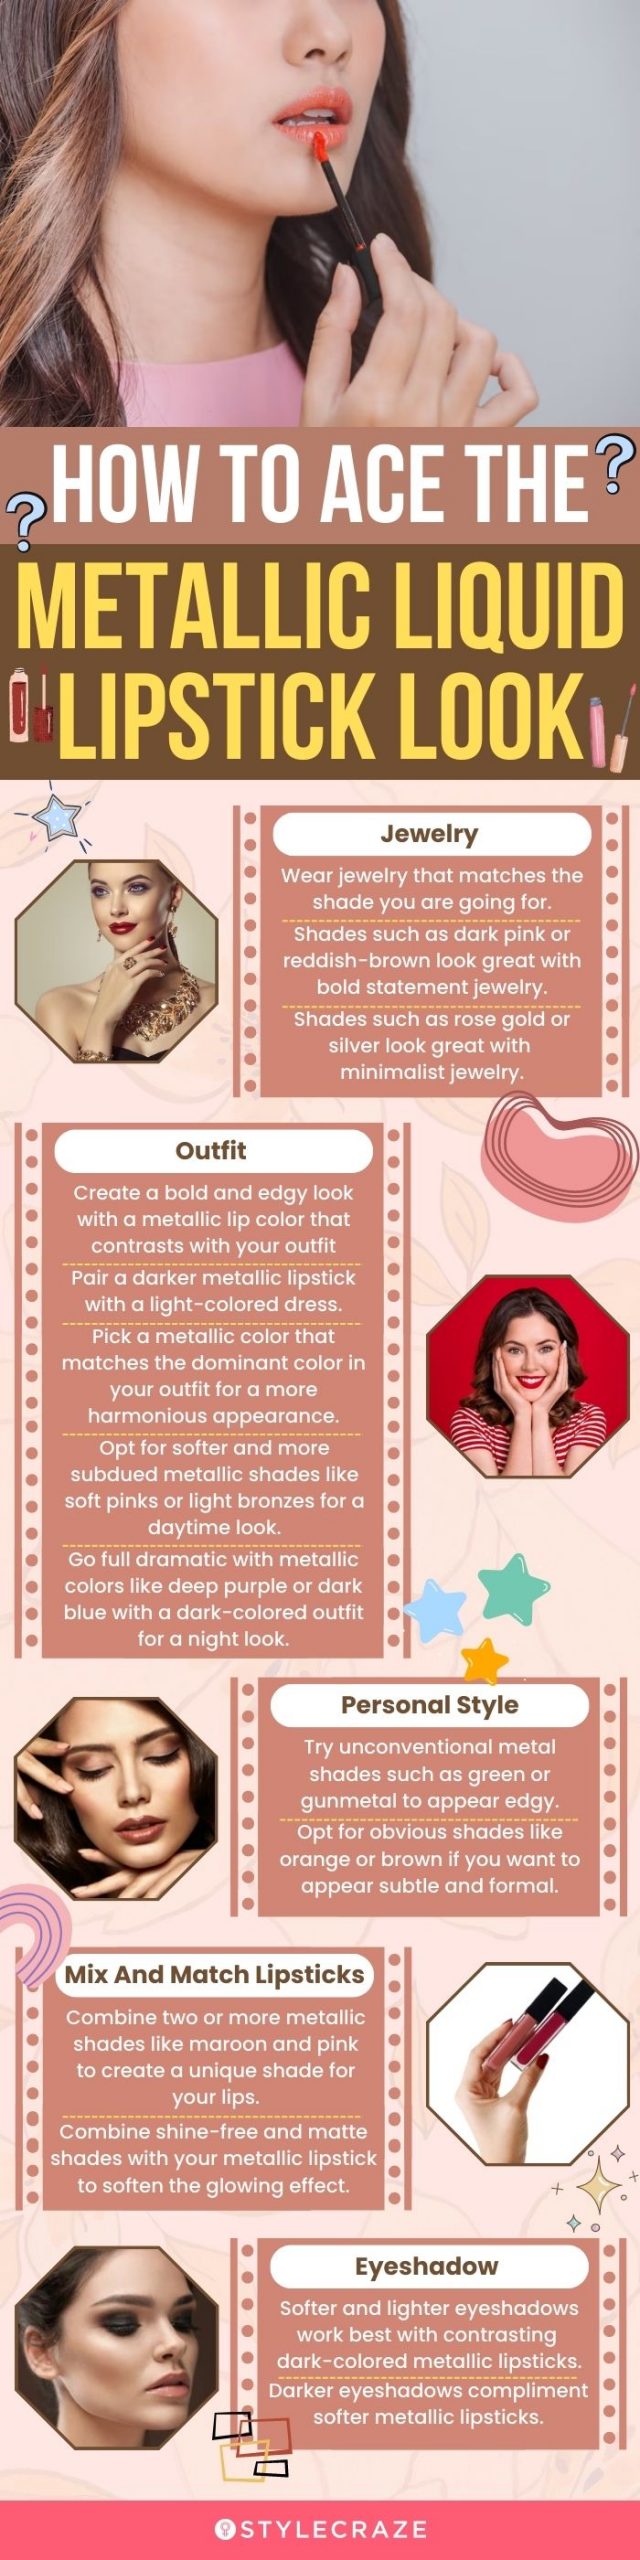 How To Ace The Metallic Liquid Lipstick Look (infographic)